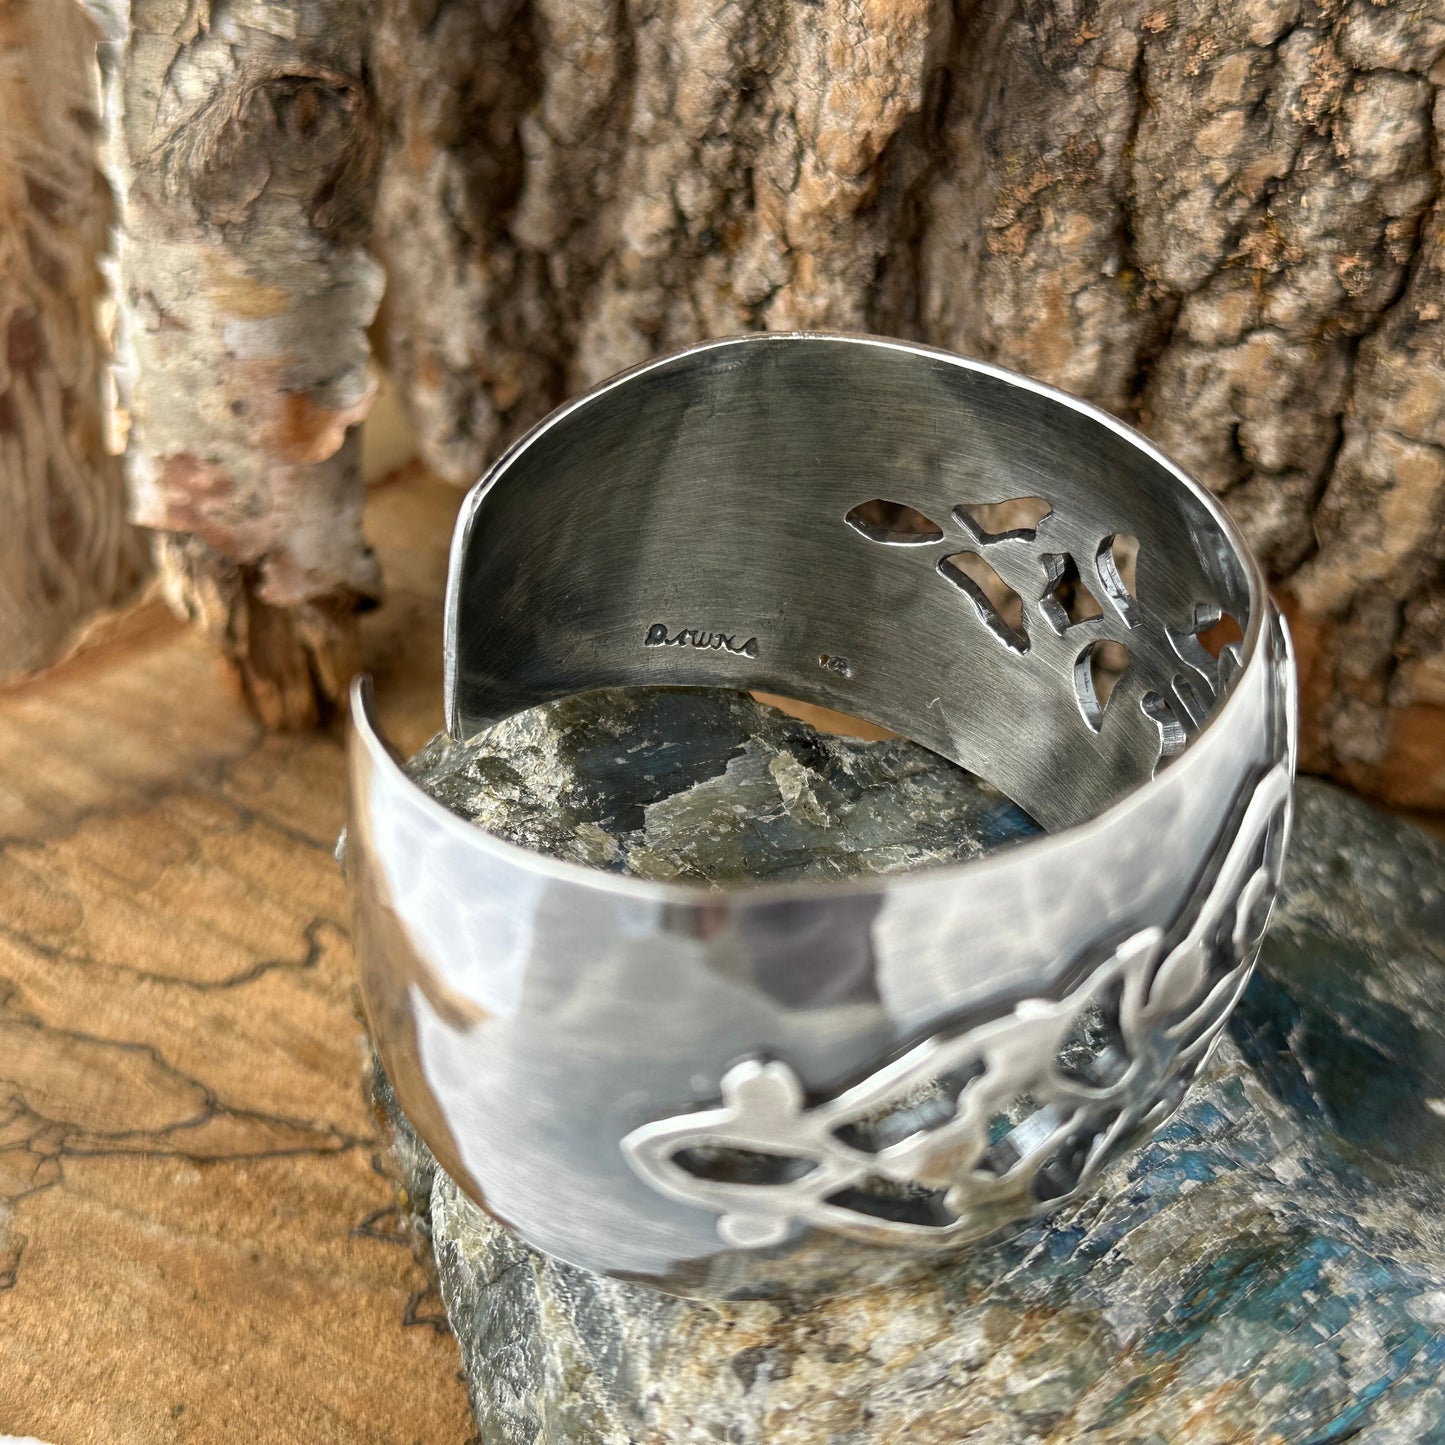 Handmade one of a kind sterling silver bracelet